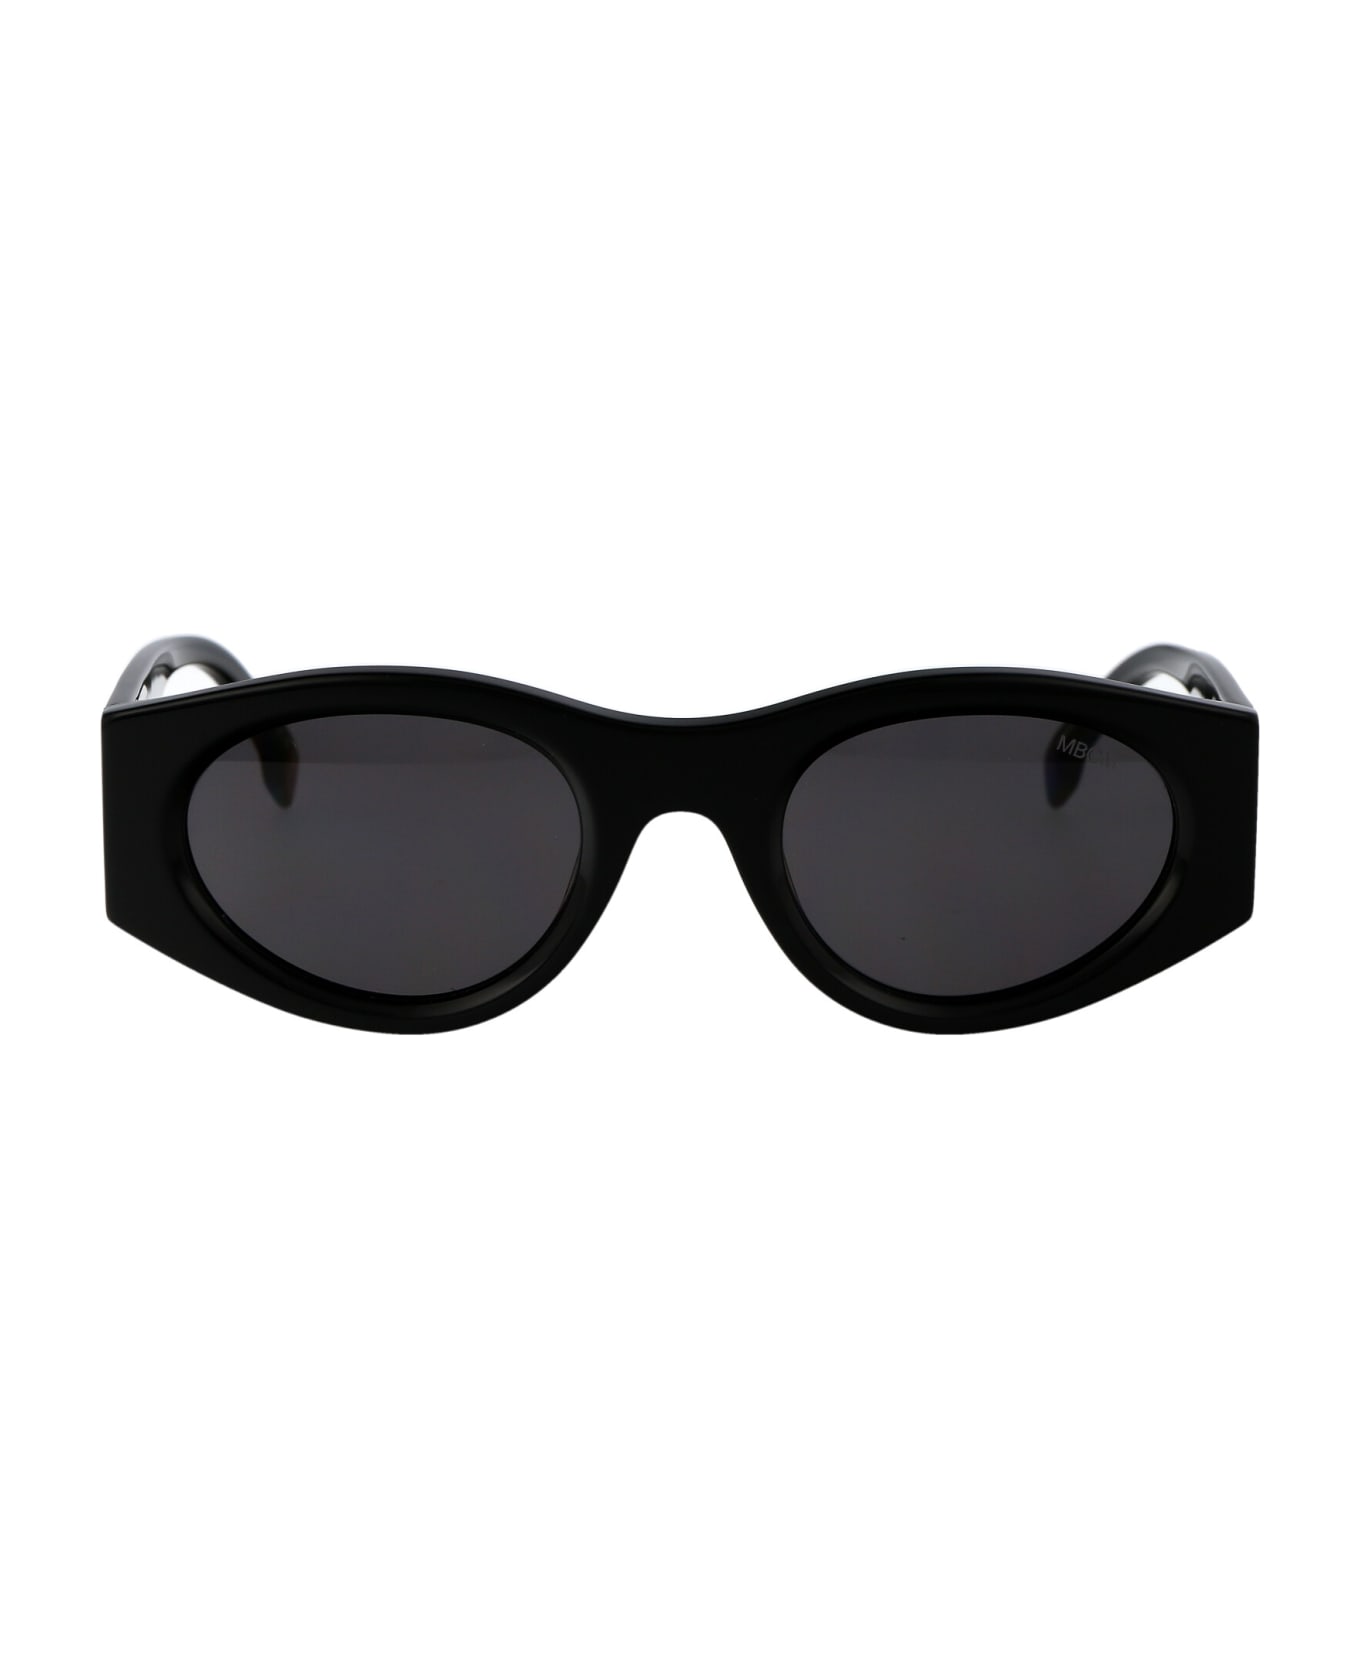 Marcelo Burlon Pasithea 021 Sunglasses - 1007 BLACK